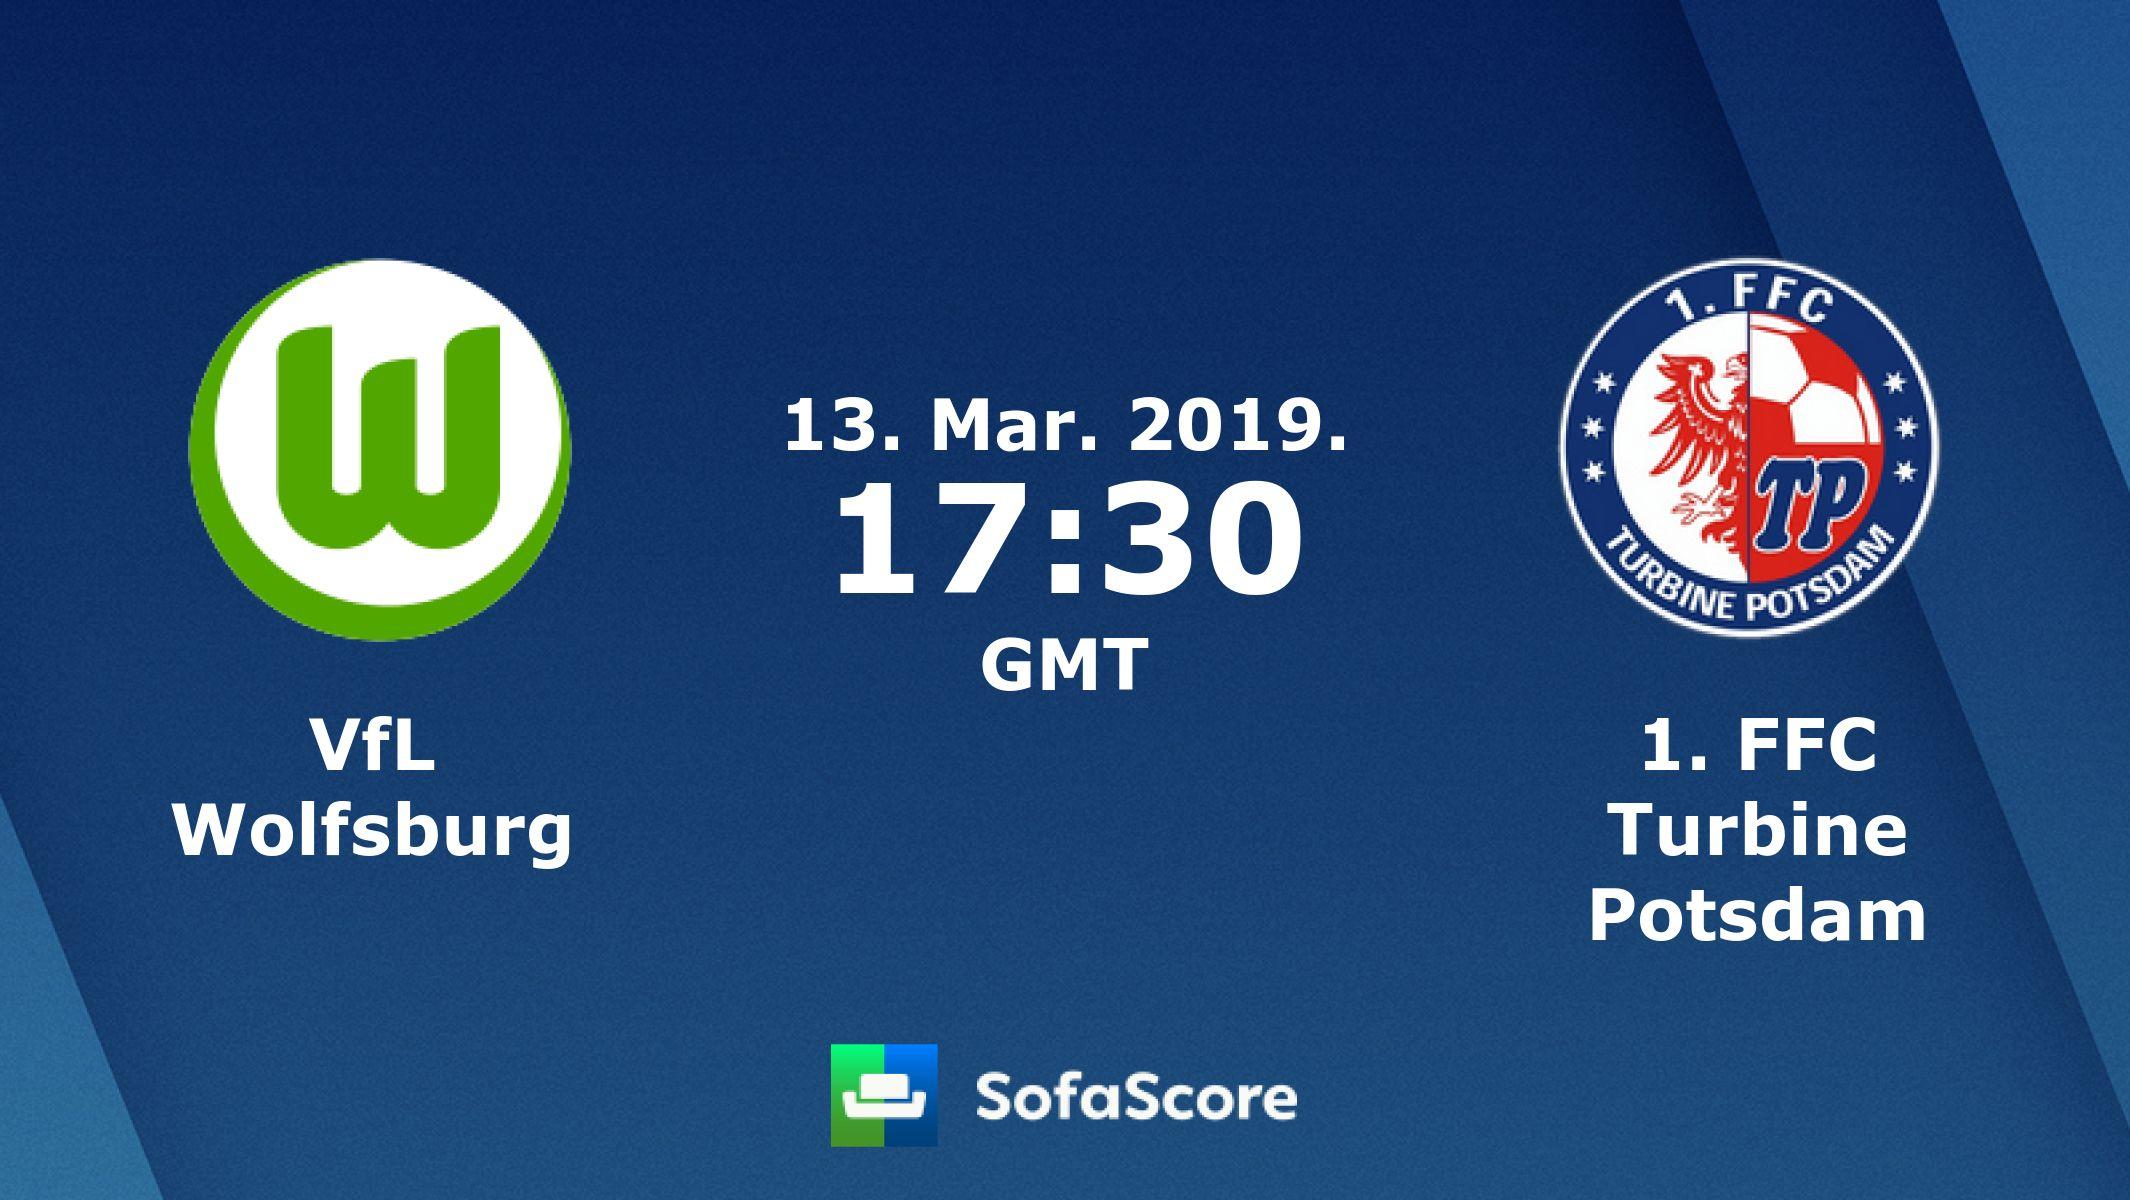 Old VfL Wolfsburg Logo - VfL Wolfsburg 1. FFC Turbine Potsdam live score, video stream